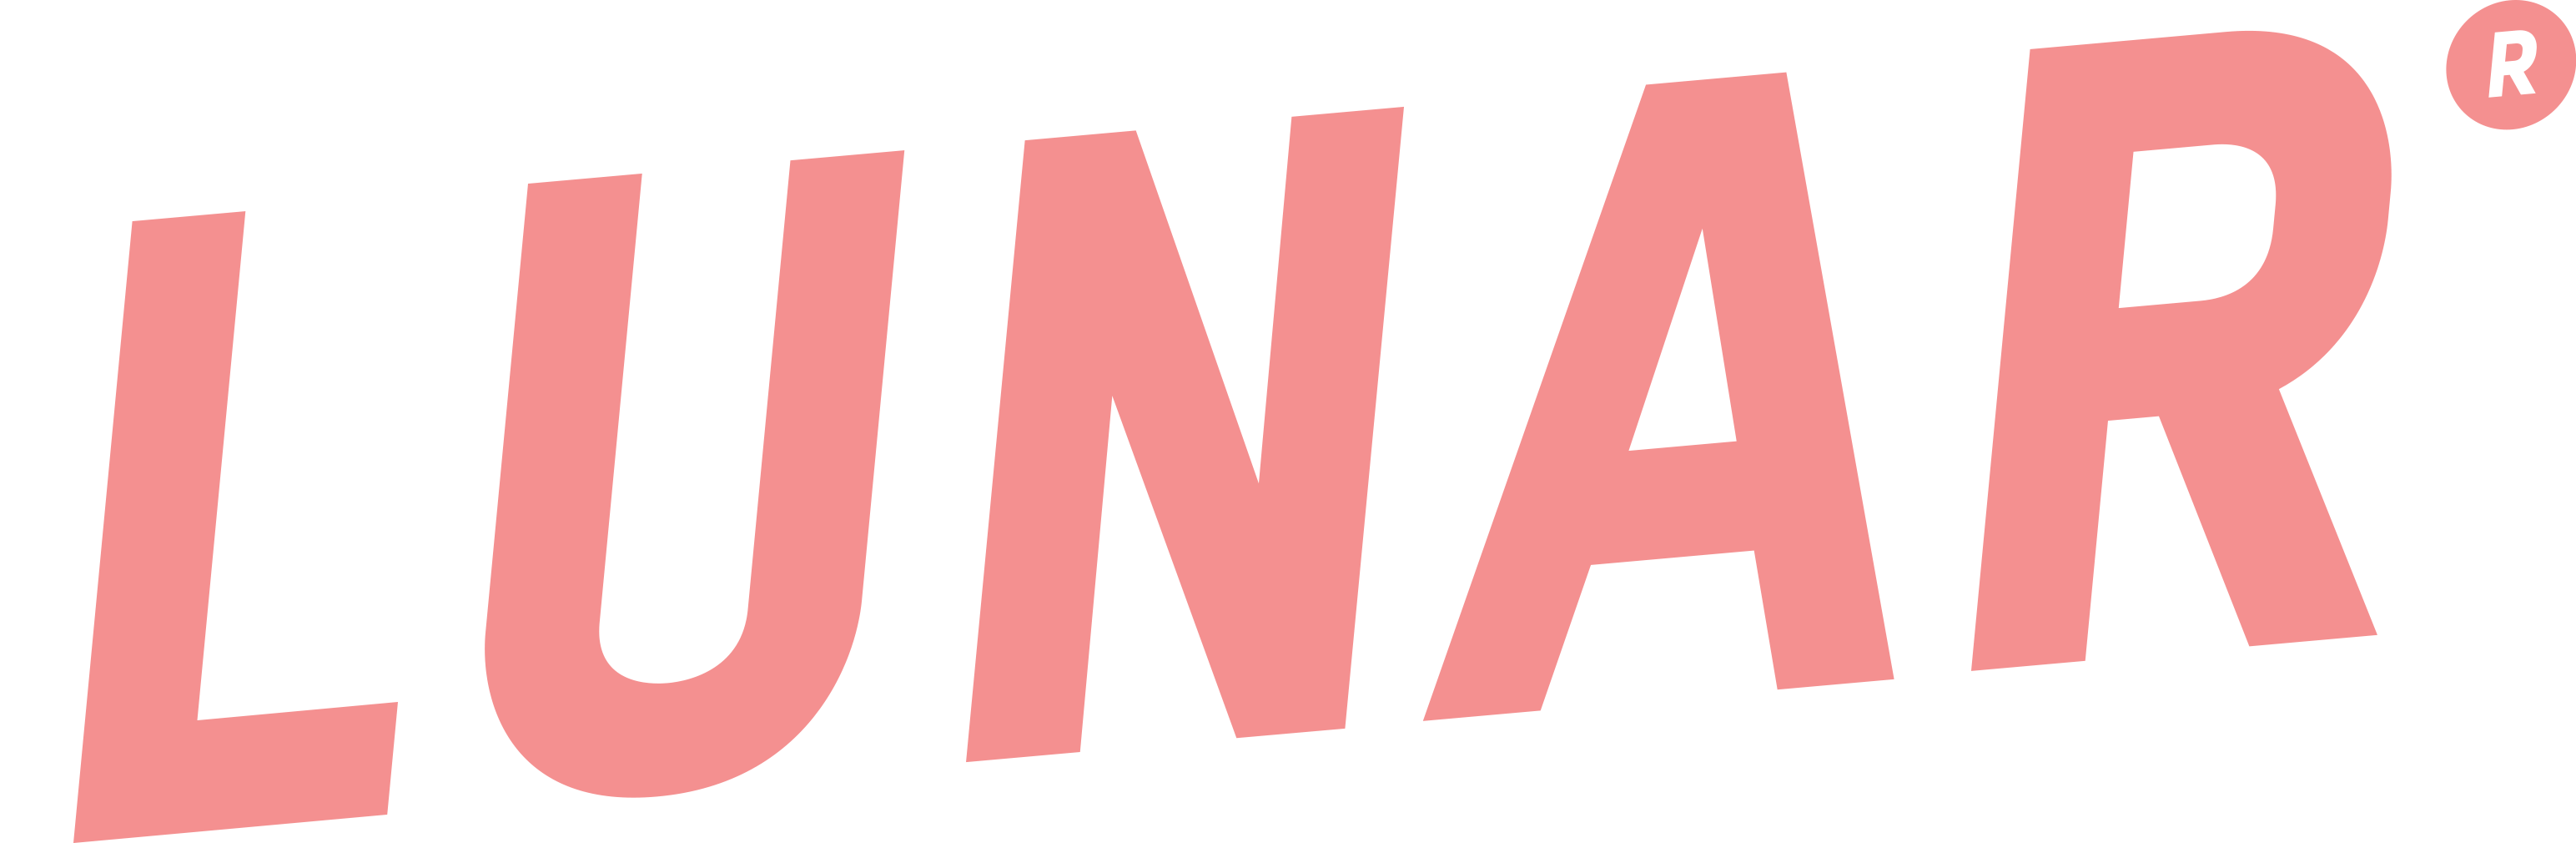 Lunar logo – Coral